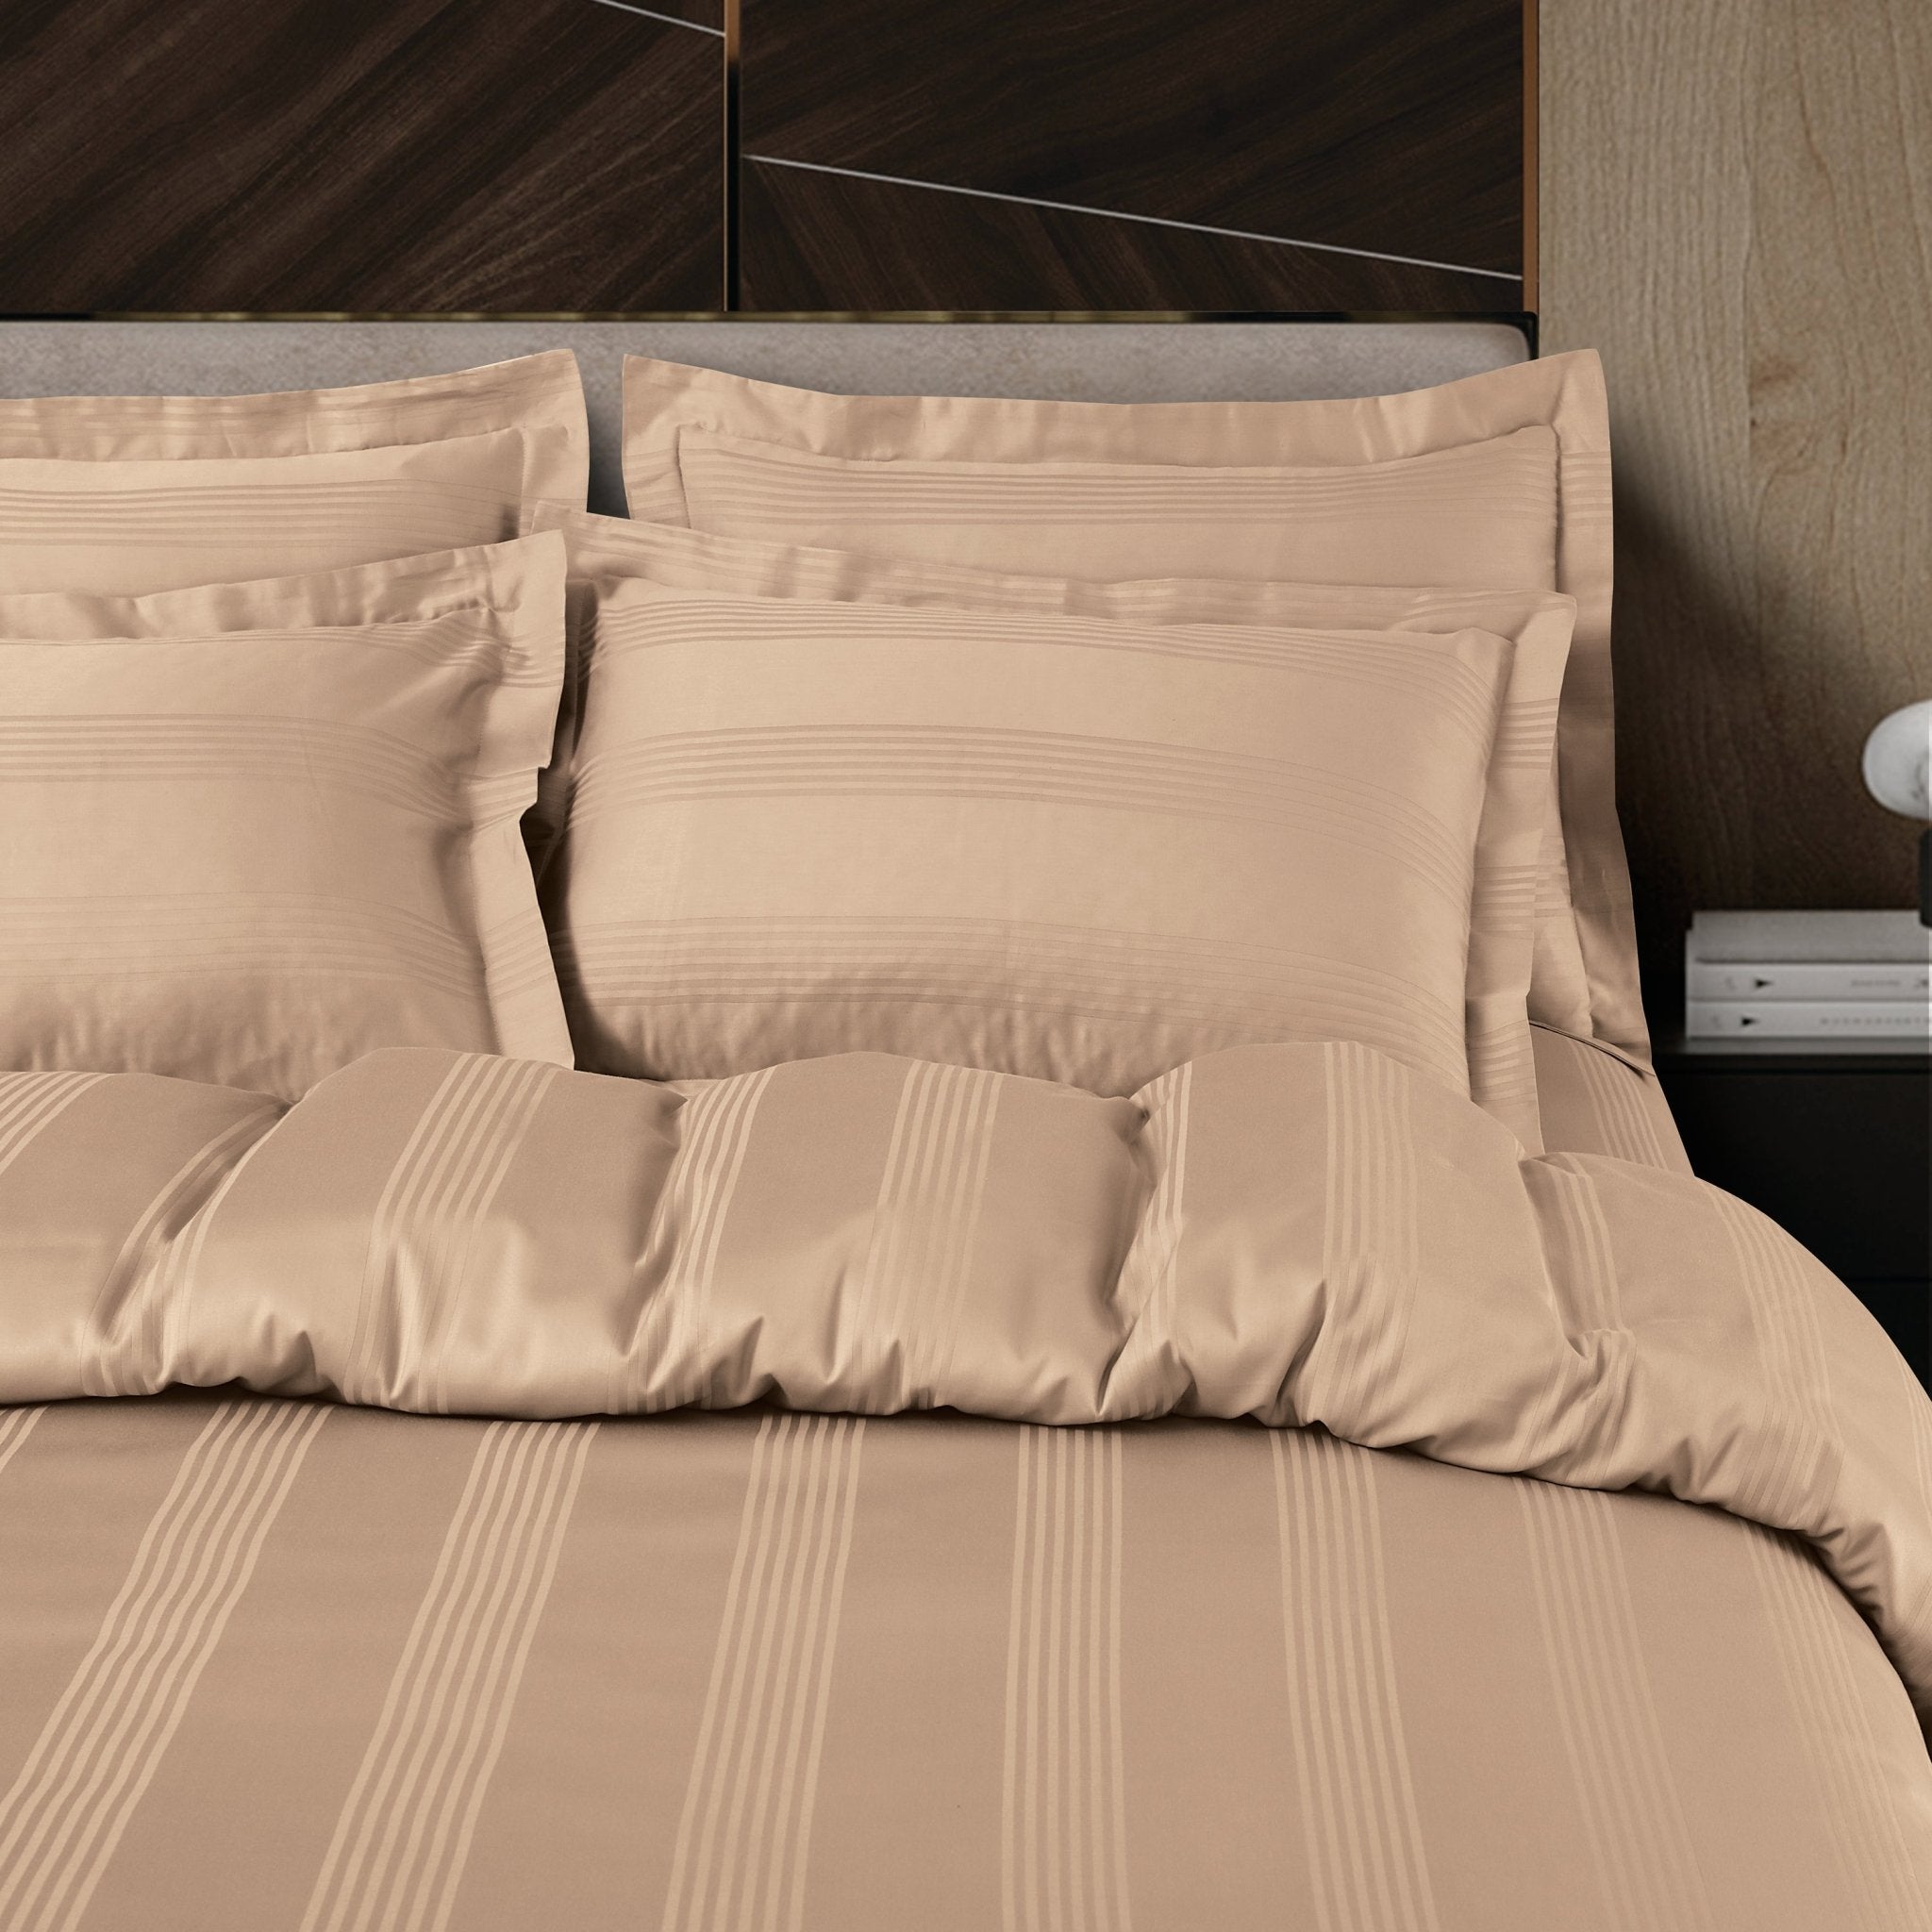 Malako Turin Jacquard Dark Fohn Stripes 450 TC 100% Cotton King Size Bed Sheet - MALAKO